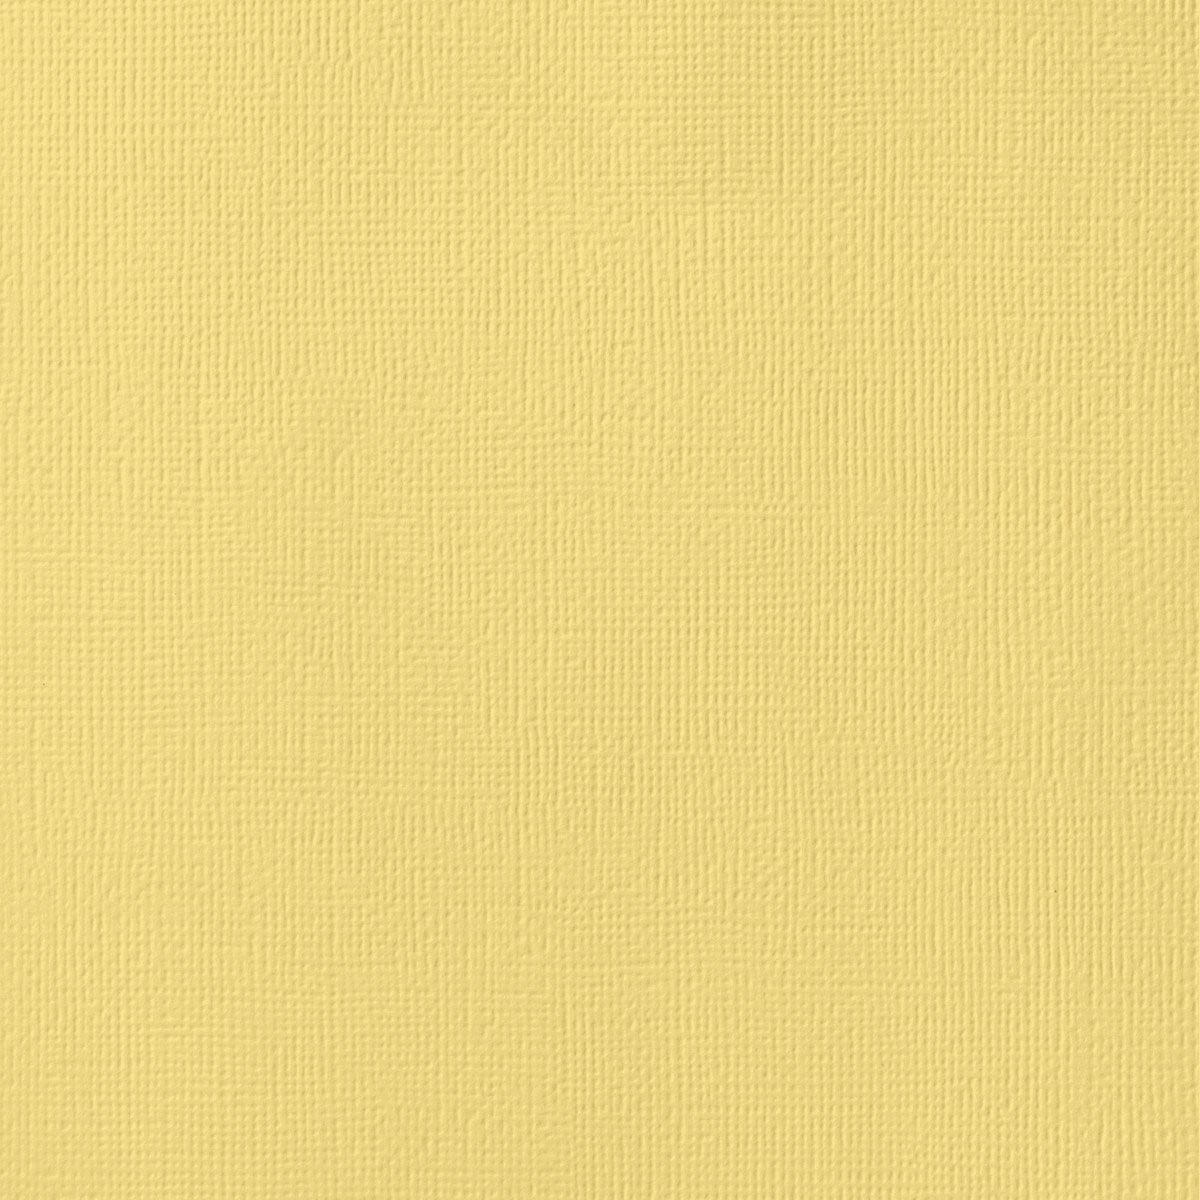 BANANA yellow cardstock - 12x12 inch - 80 lb - textured scrapbook paper - American Crafts